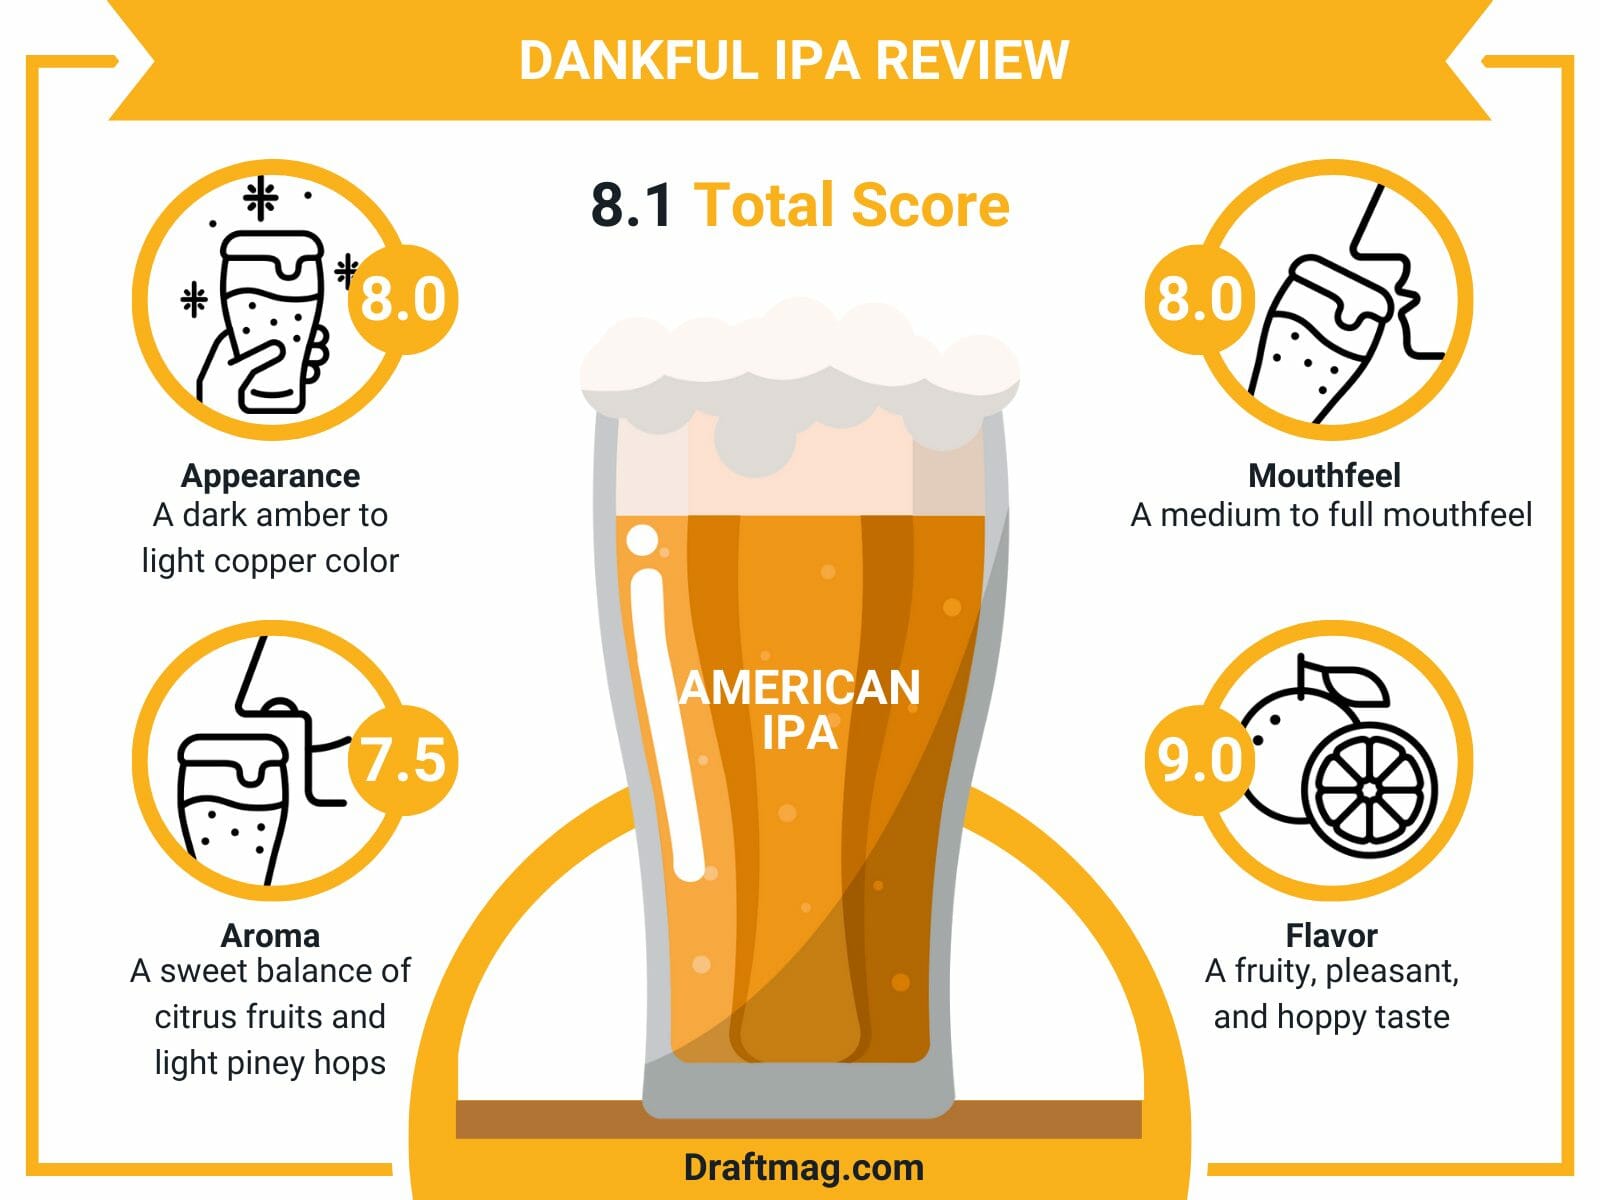 Dankful ipa review infographic